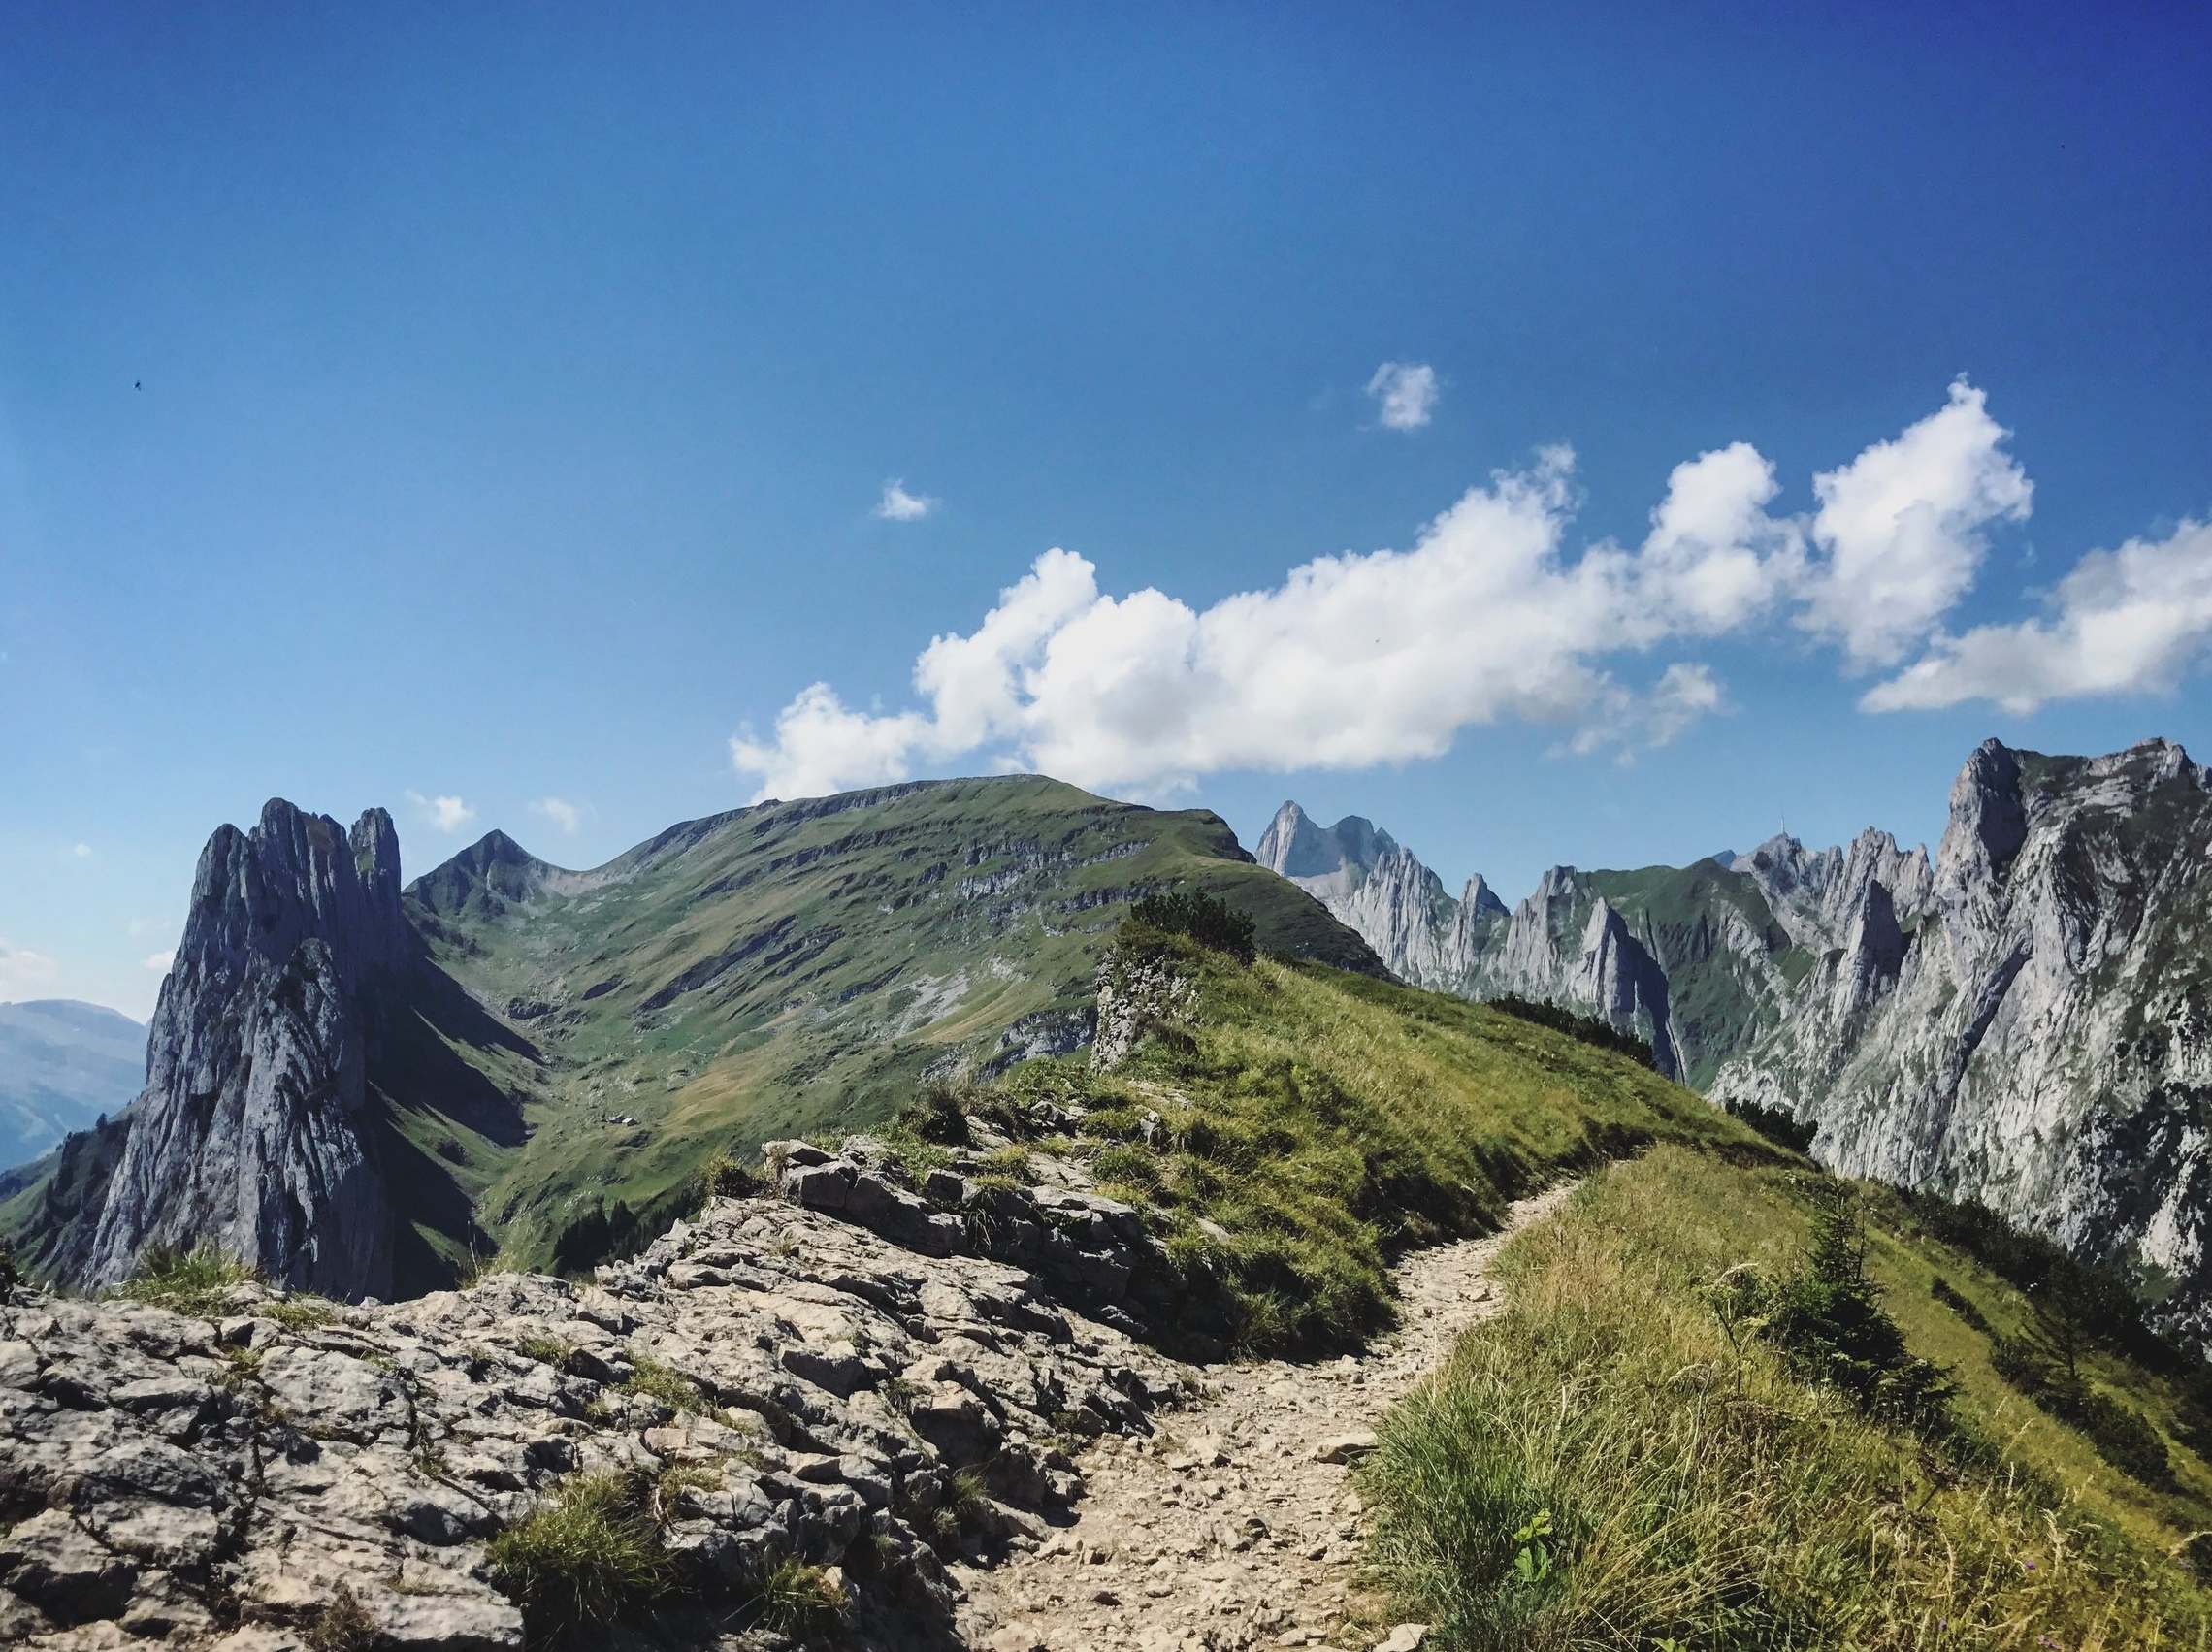 MiFID II Risk Profiles: Is it like hiking Alpine mountain trails?